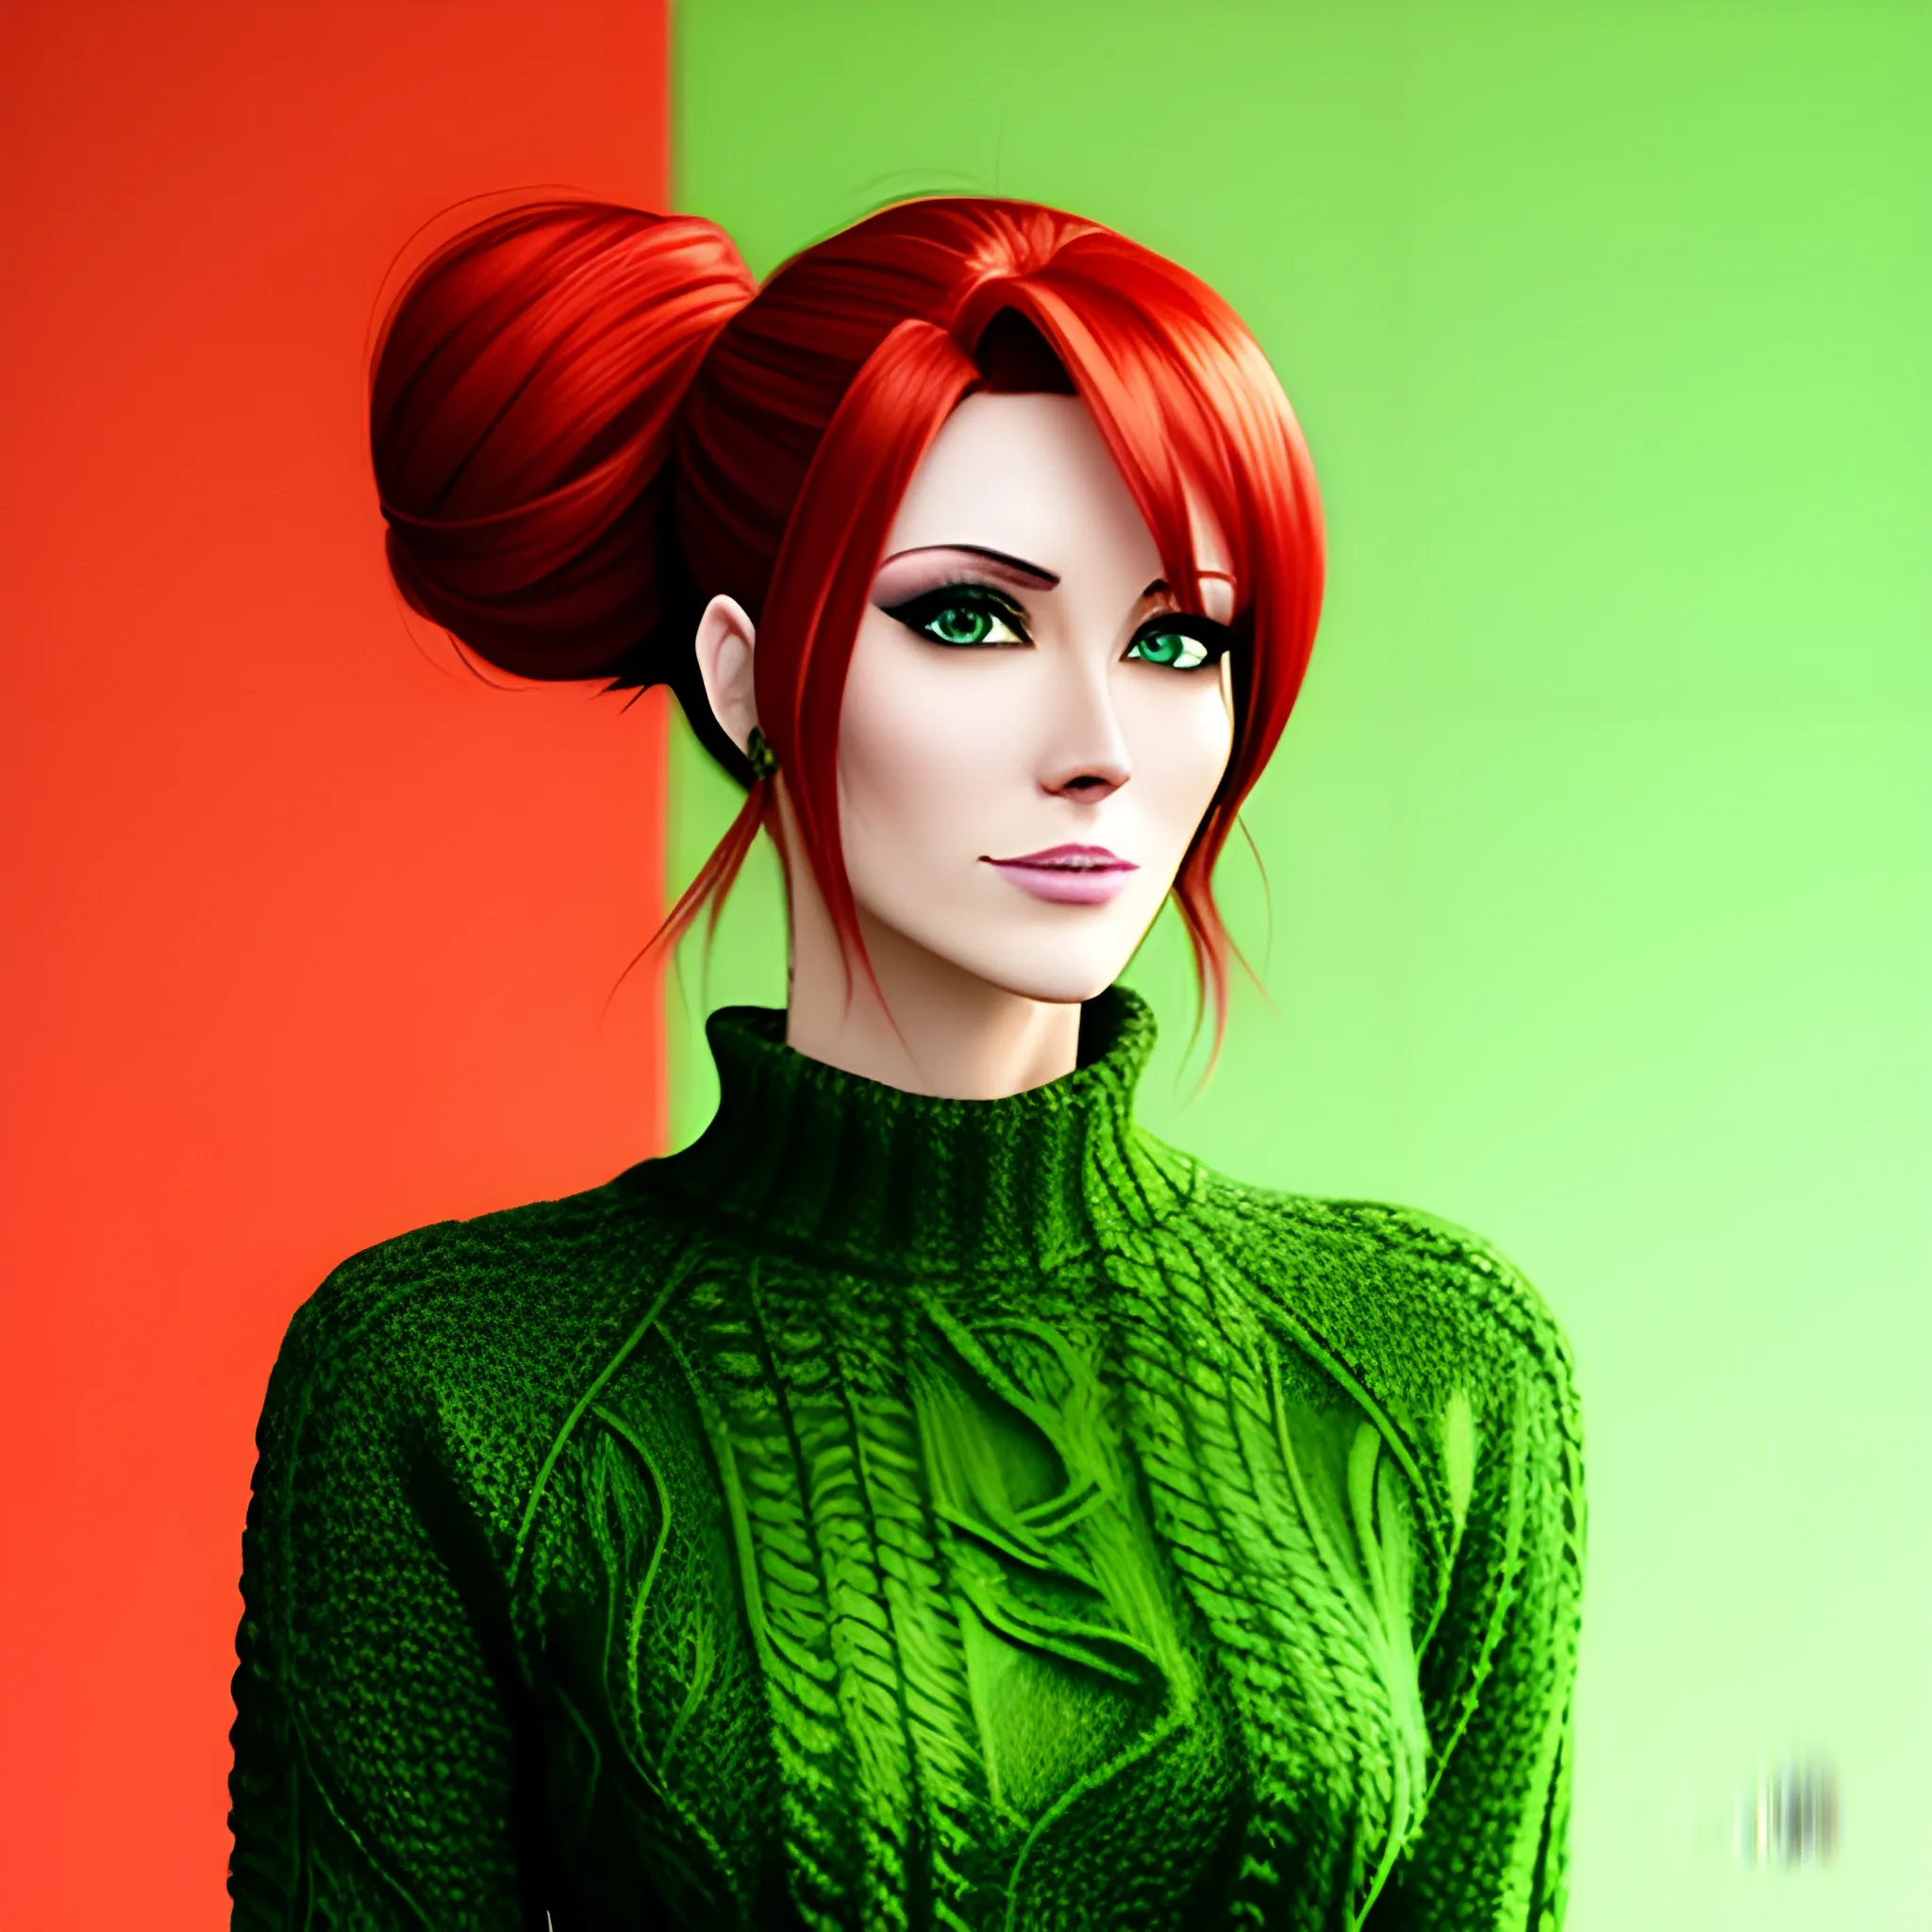 anime cartoon girl, red hair with messy bun, wearing green sweater